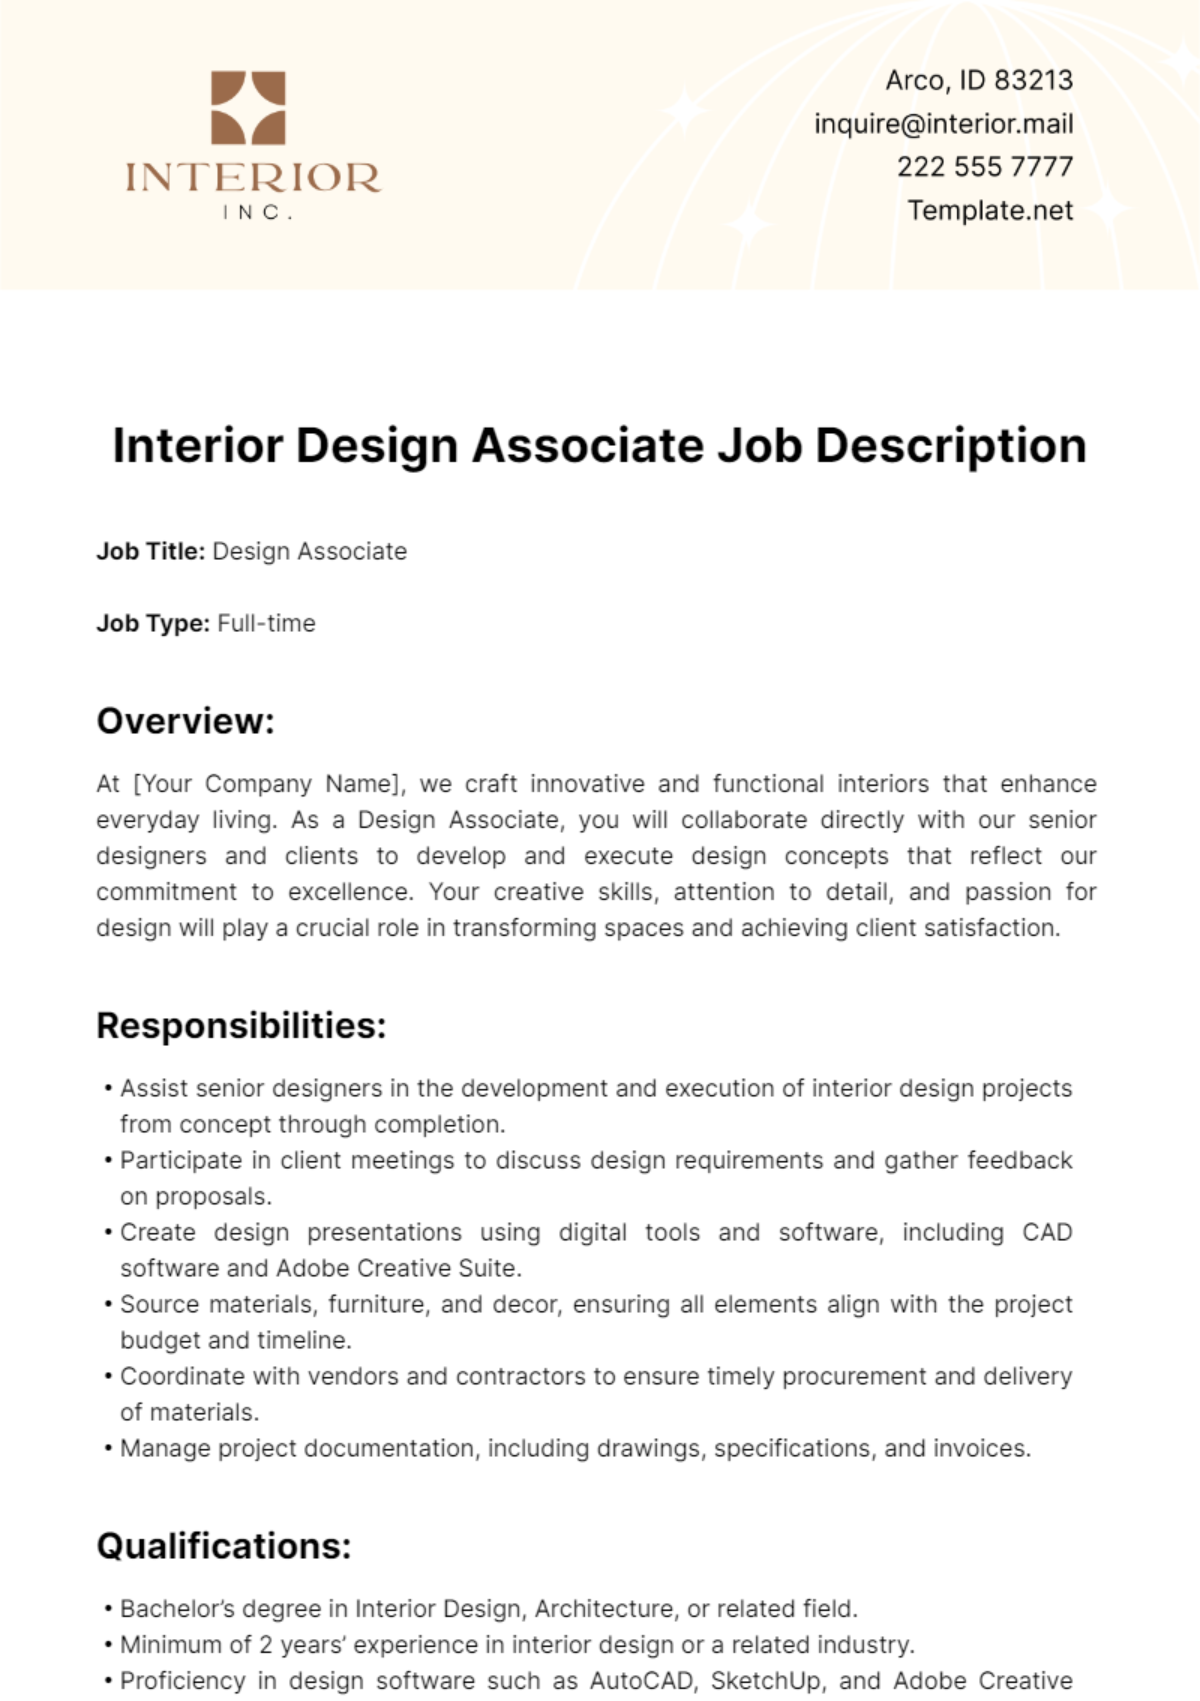 Interior Design Associate Job Description Template